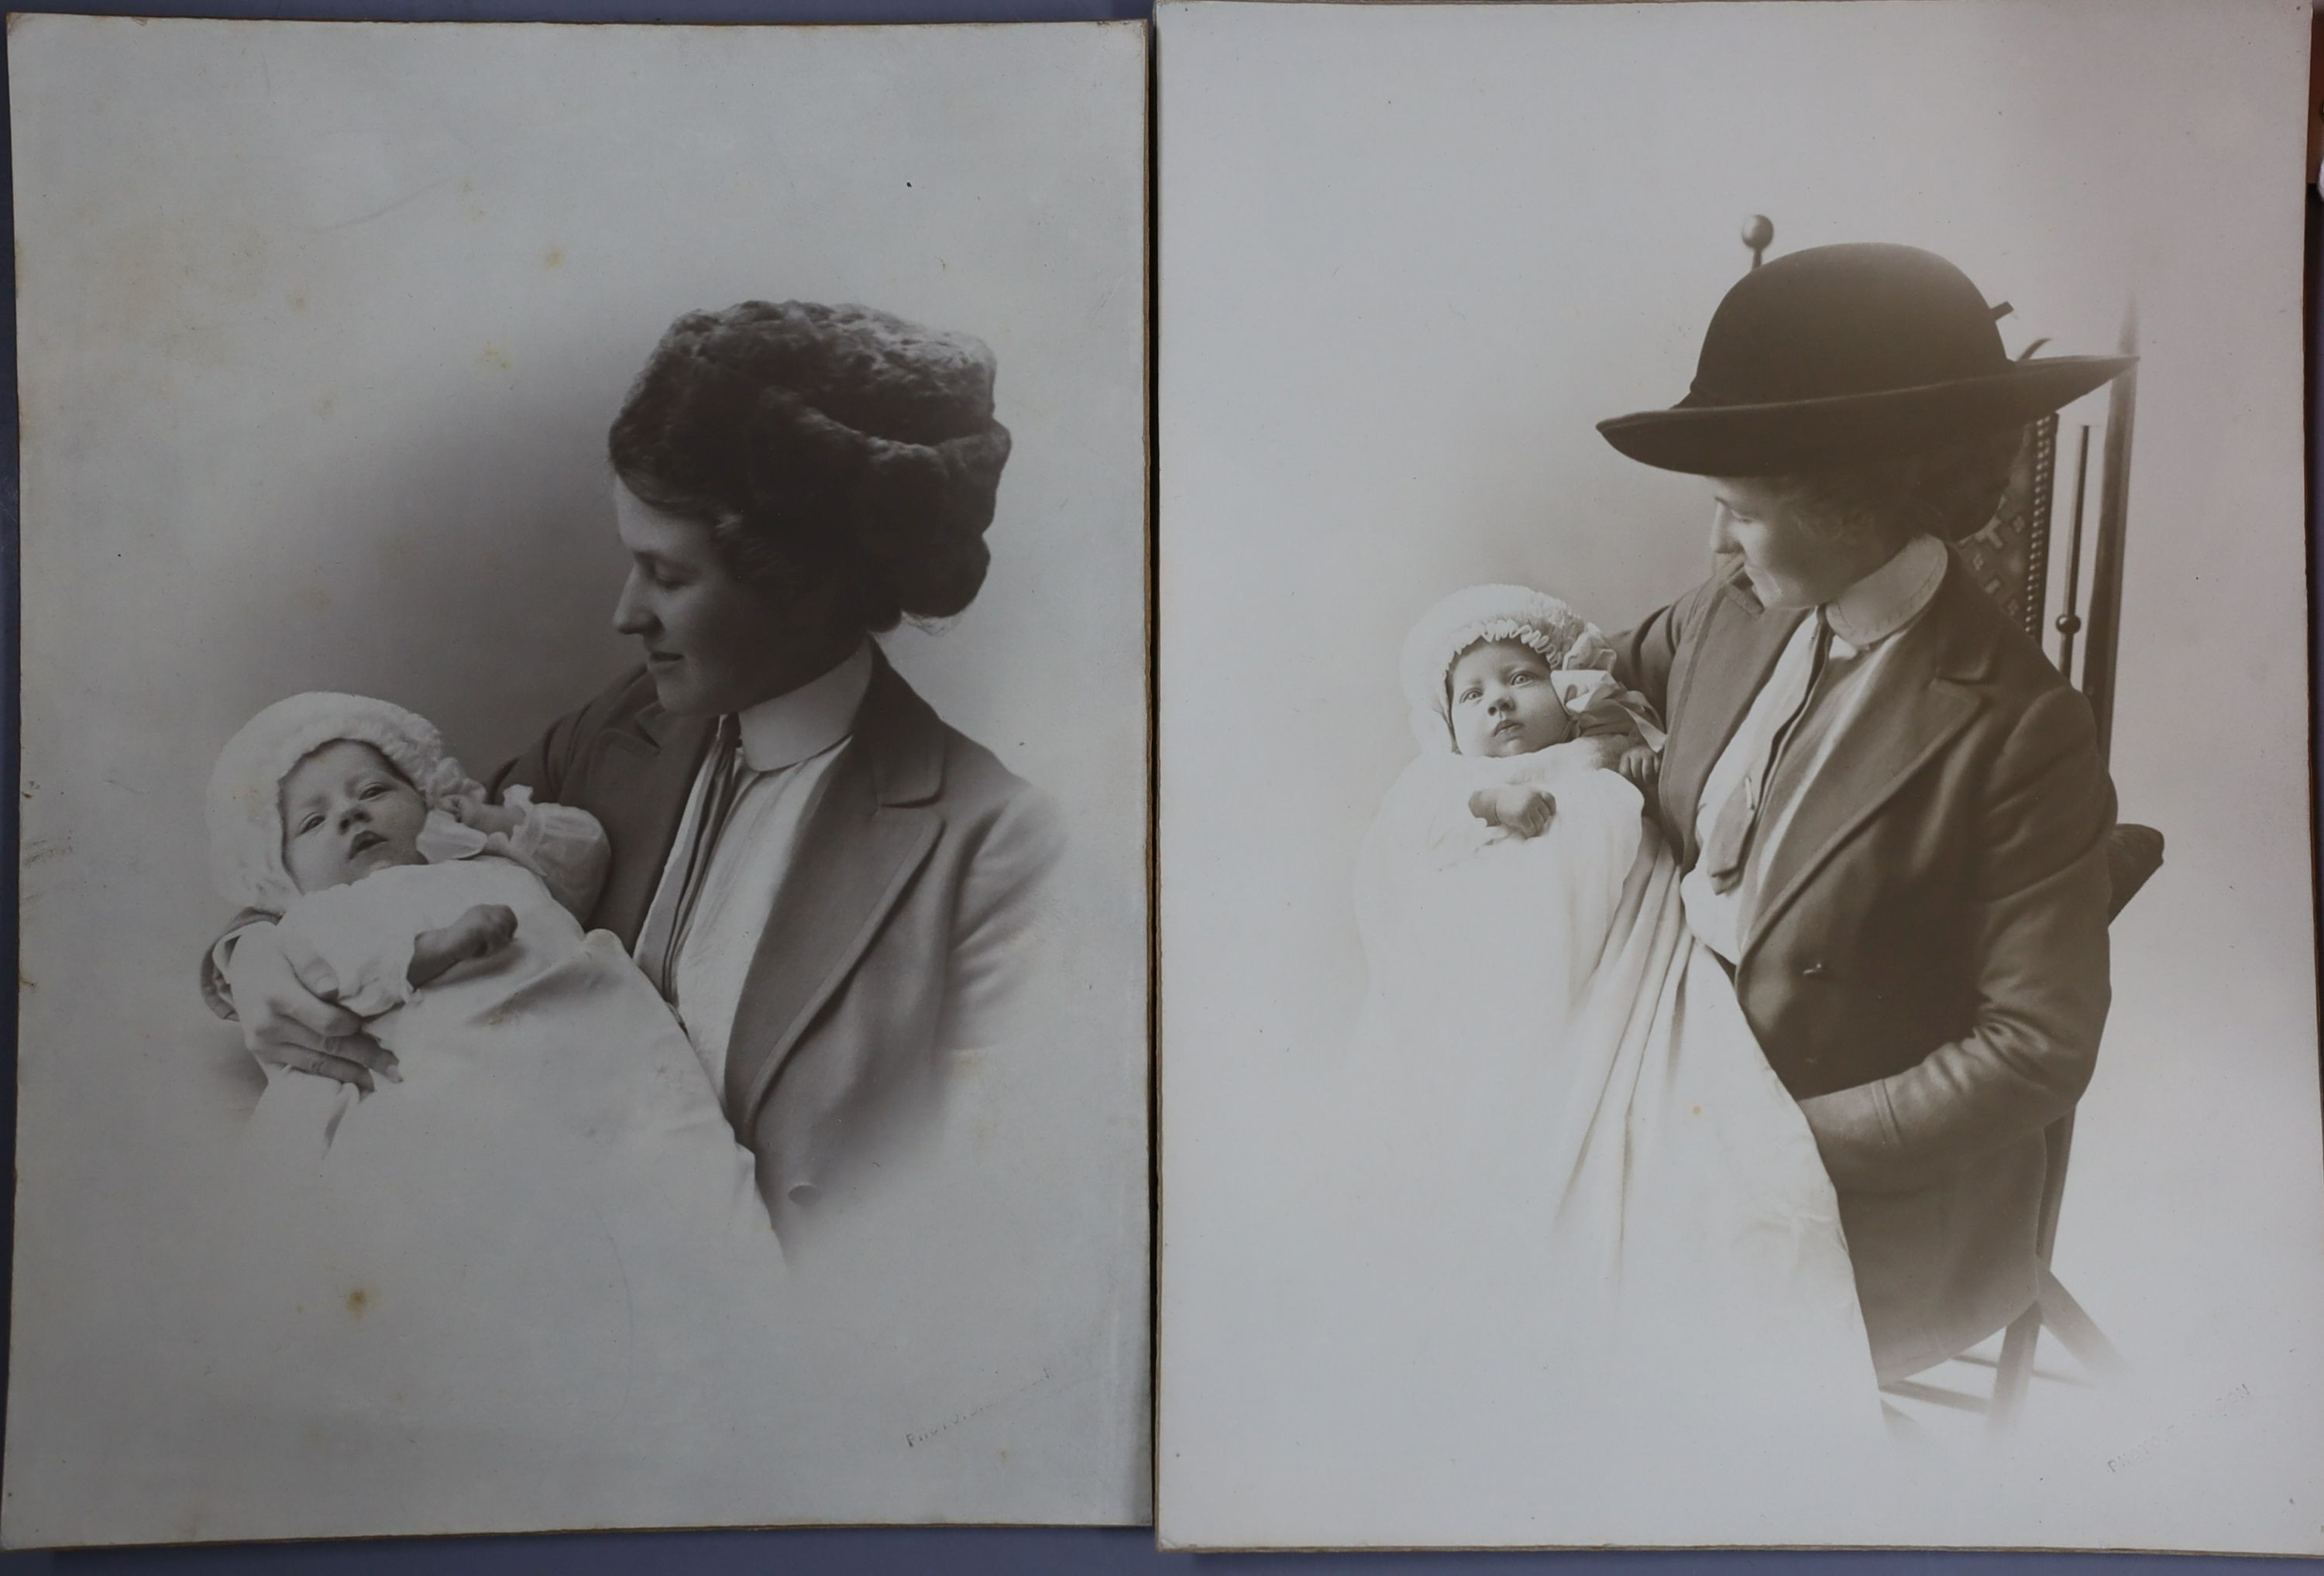 A collection of daguerrotypes, domestic photos